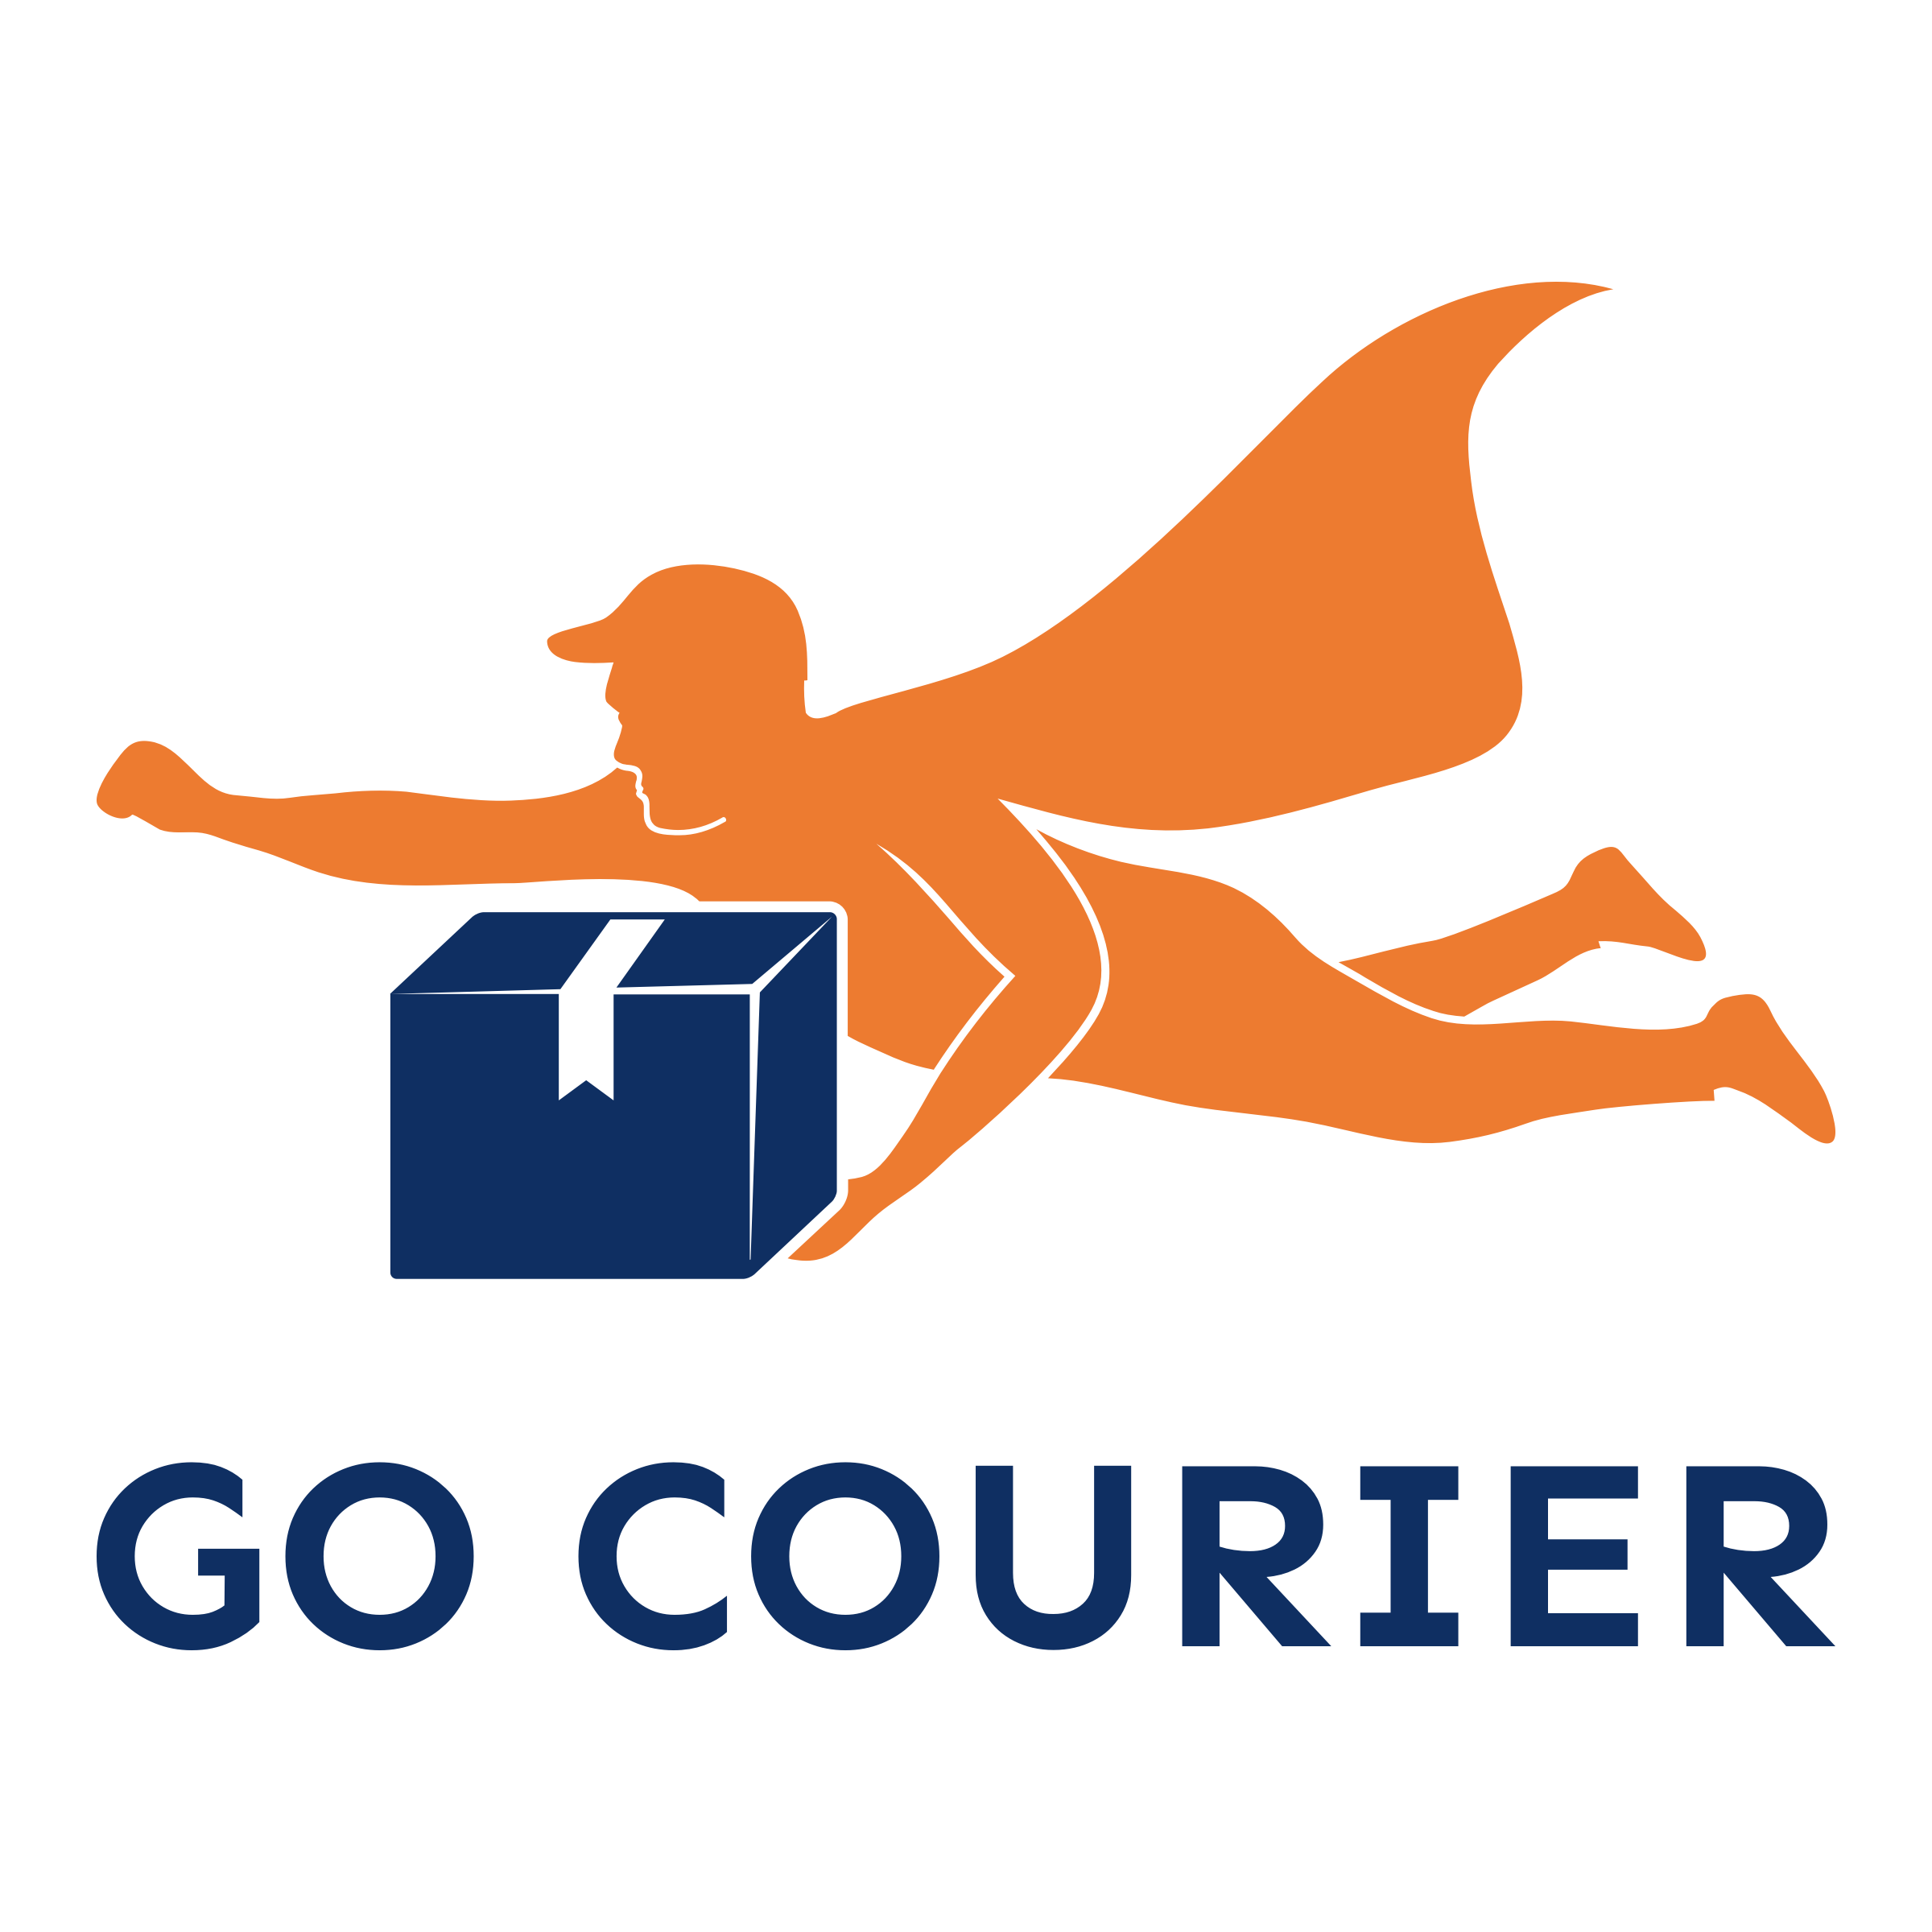 courier company logos